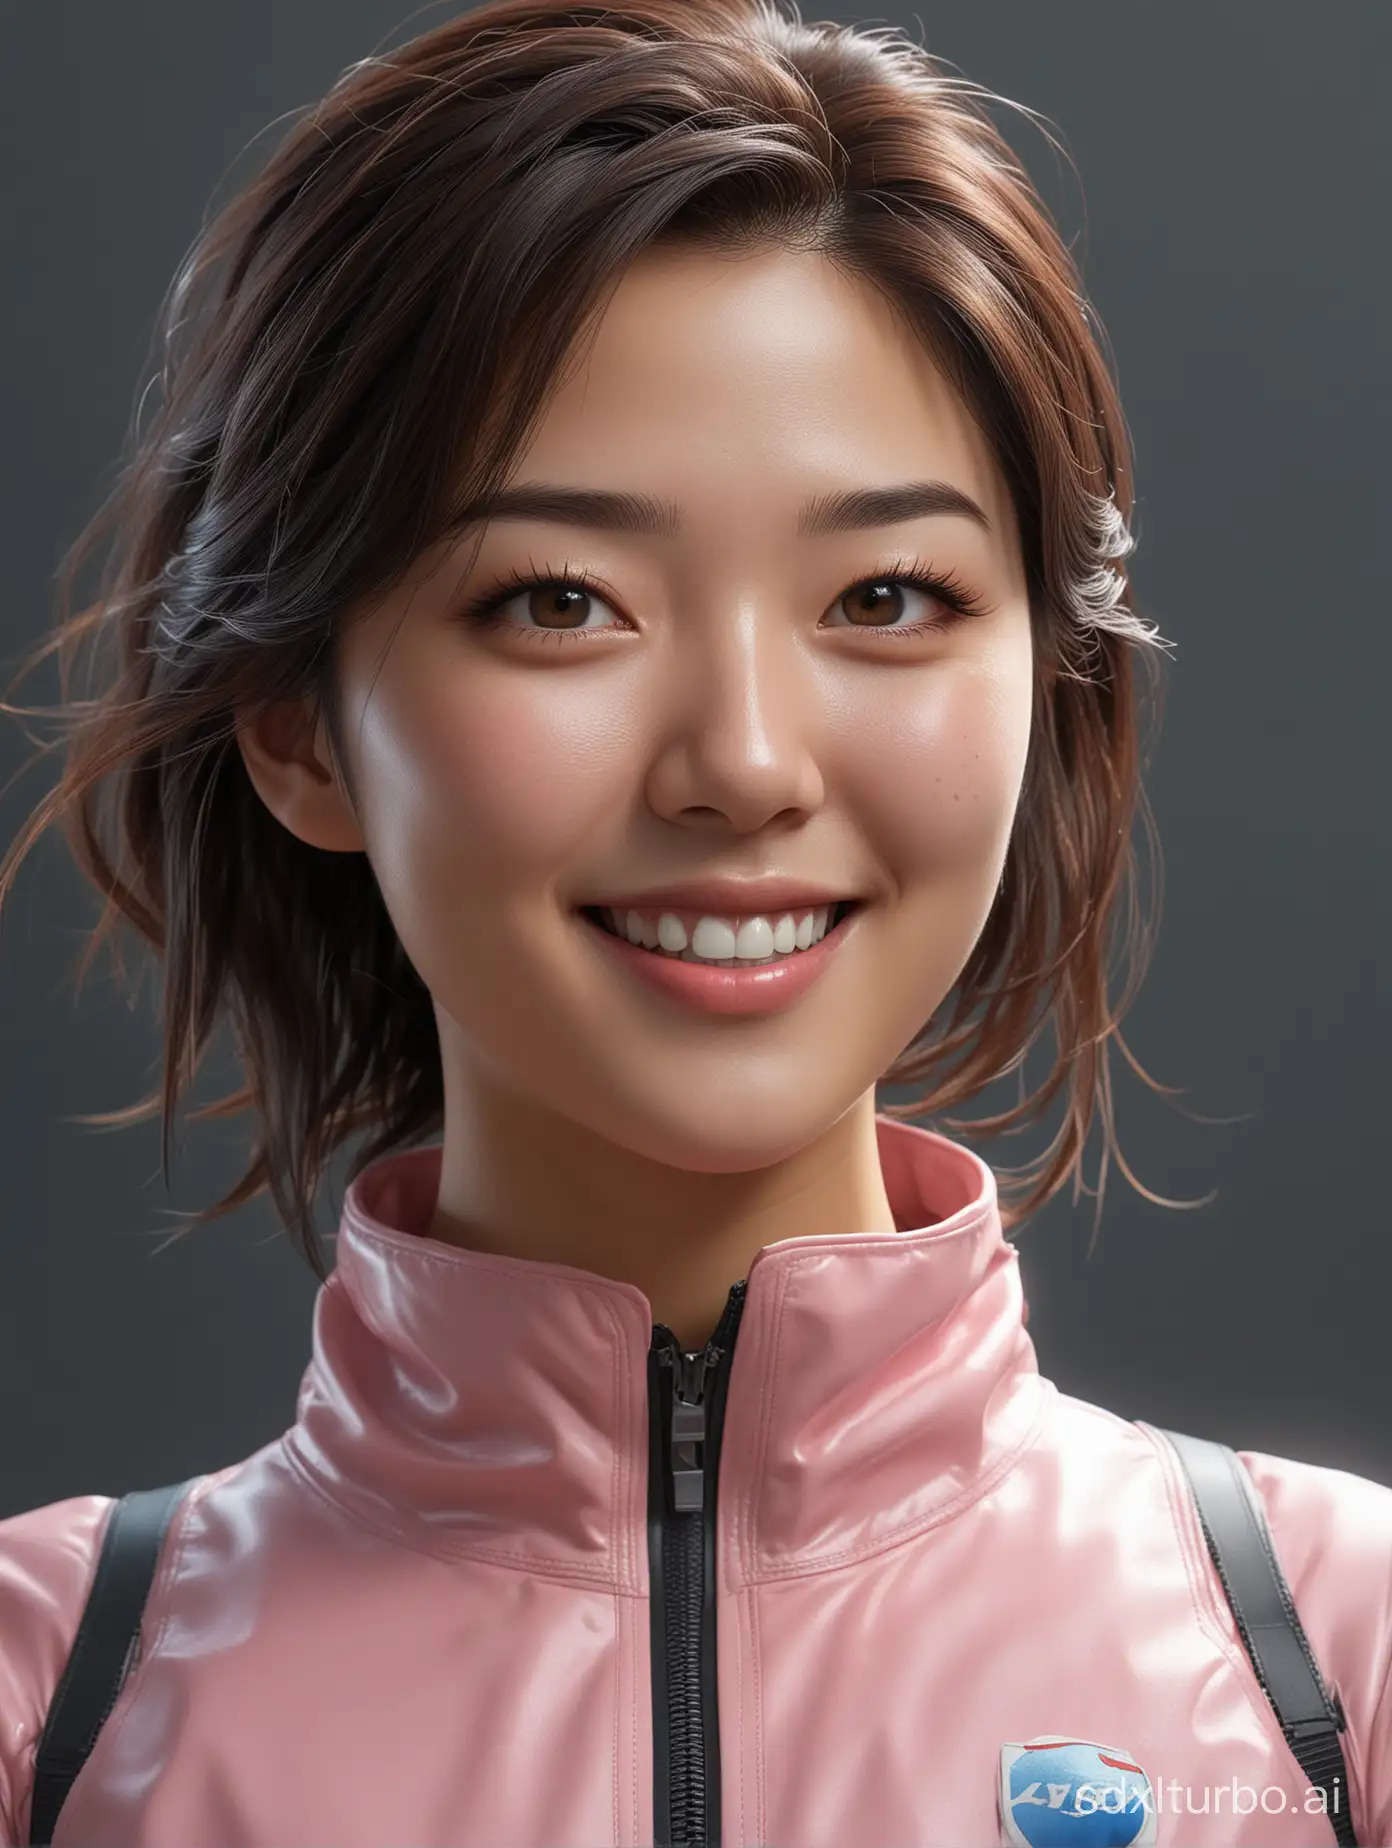 Hyper realistic picture of a beautiful korean girl in an EVA plugsuit, hyper detailed, by greg rutkowski, trending on artstation, <lora:esa29:1> , <lora:more_details:1> , smiling